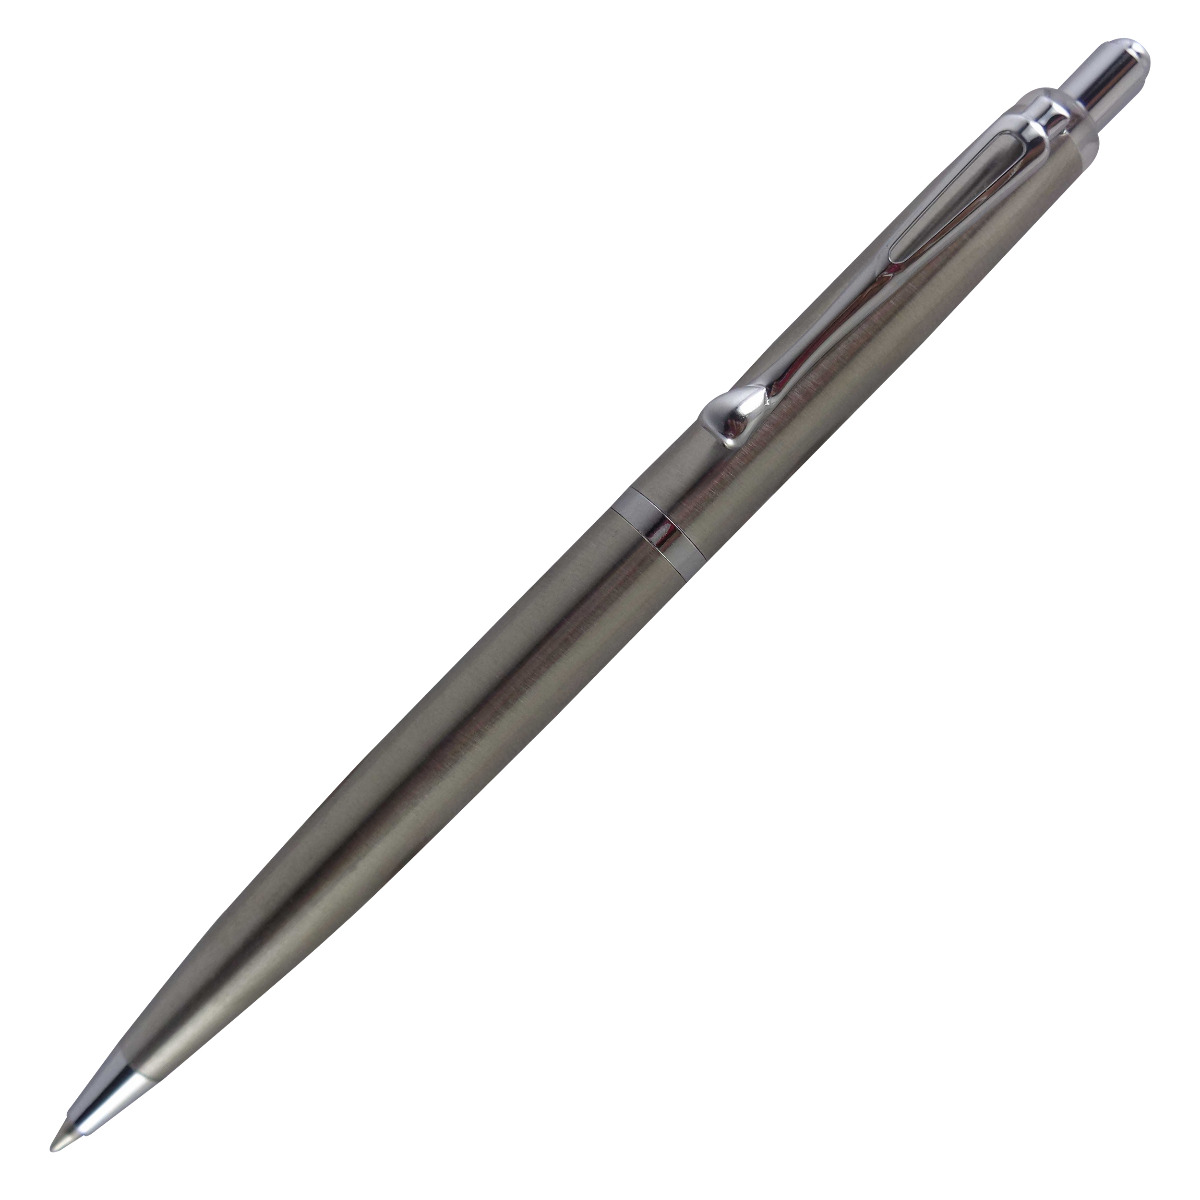 Penhouse.in Model: 14551 silver color body with silver clip medium tip retractable ball pen